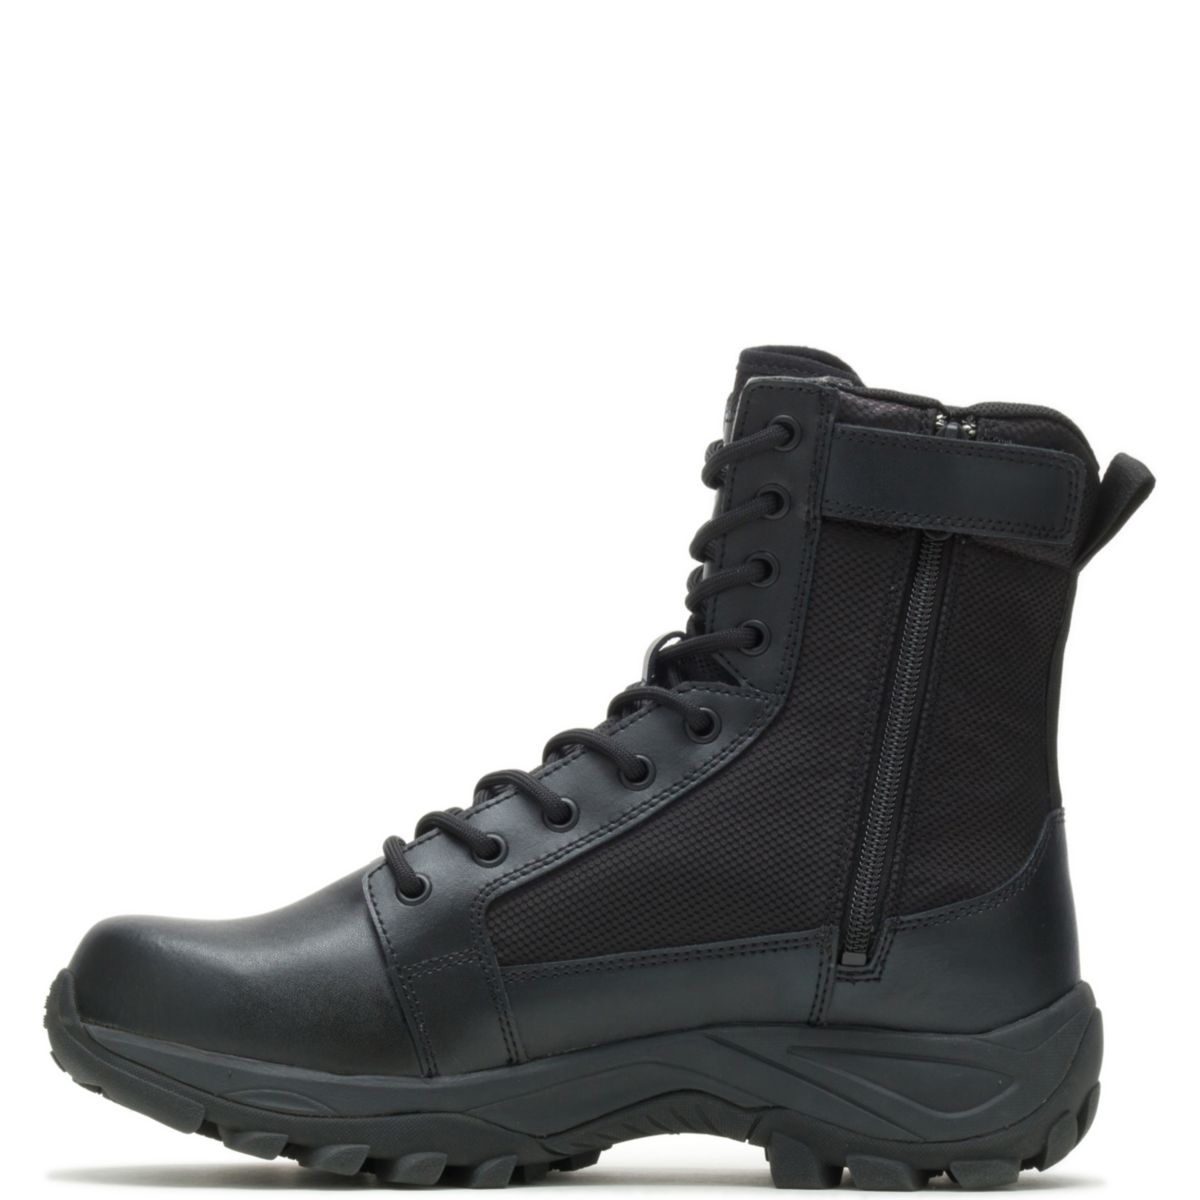 Bates Men's Fuse 8-inch Side Zip Waterproof Boot Black - E06508 BLACK - BLACK, 10.5